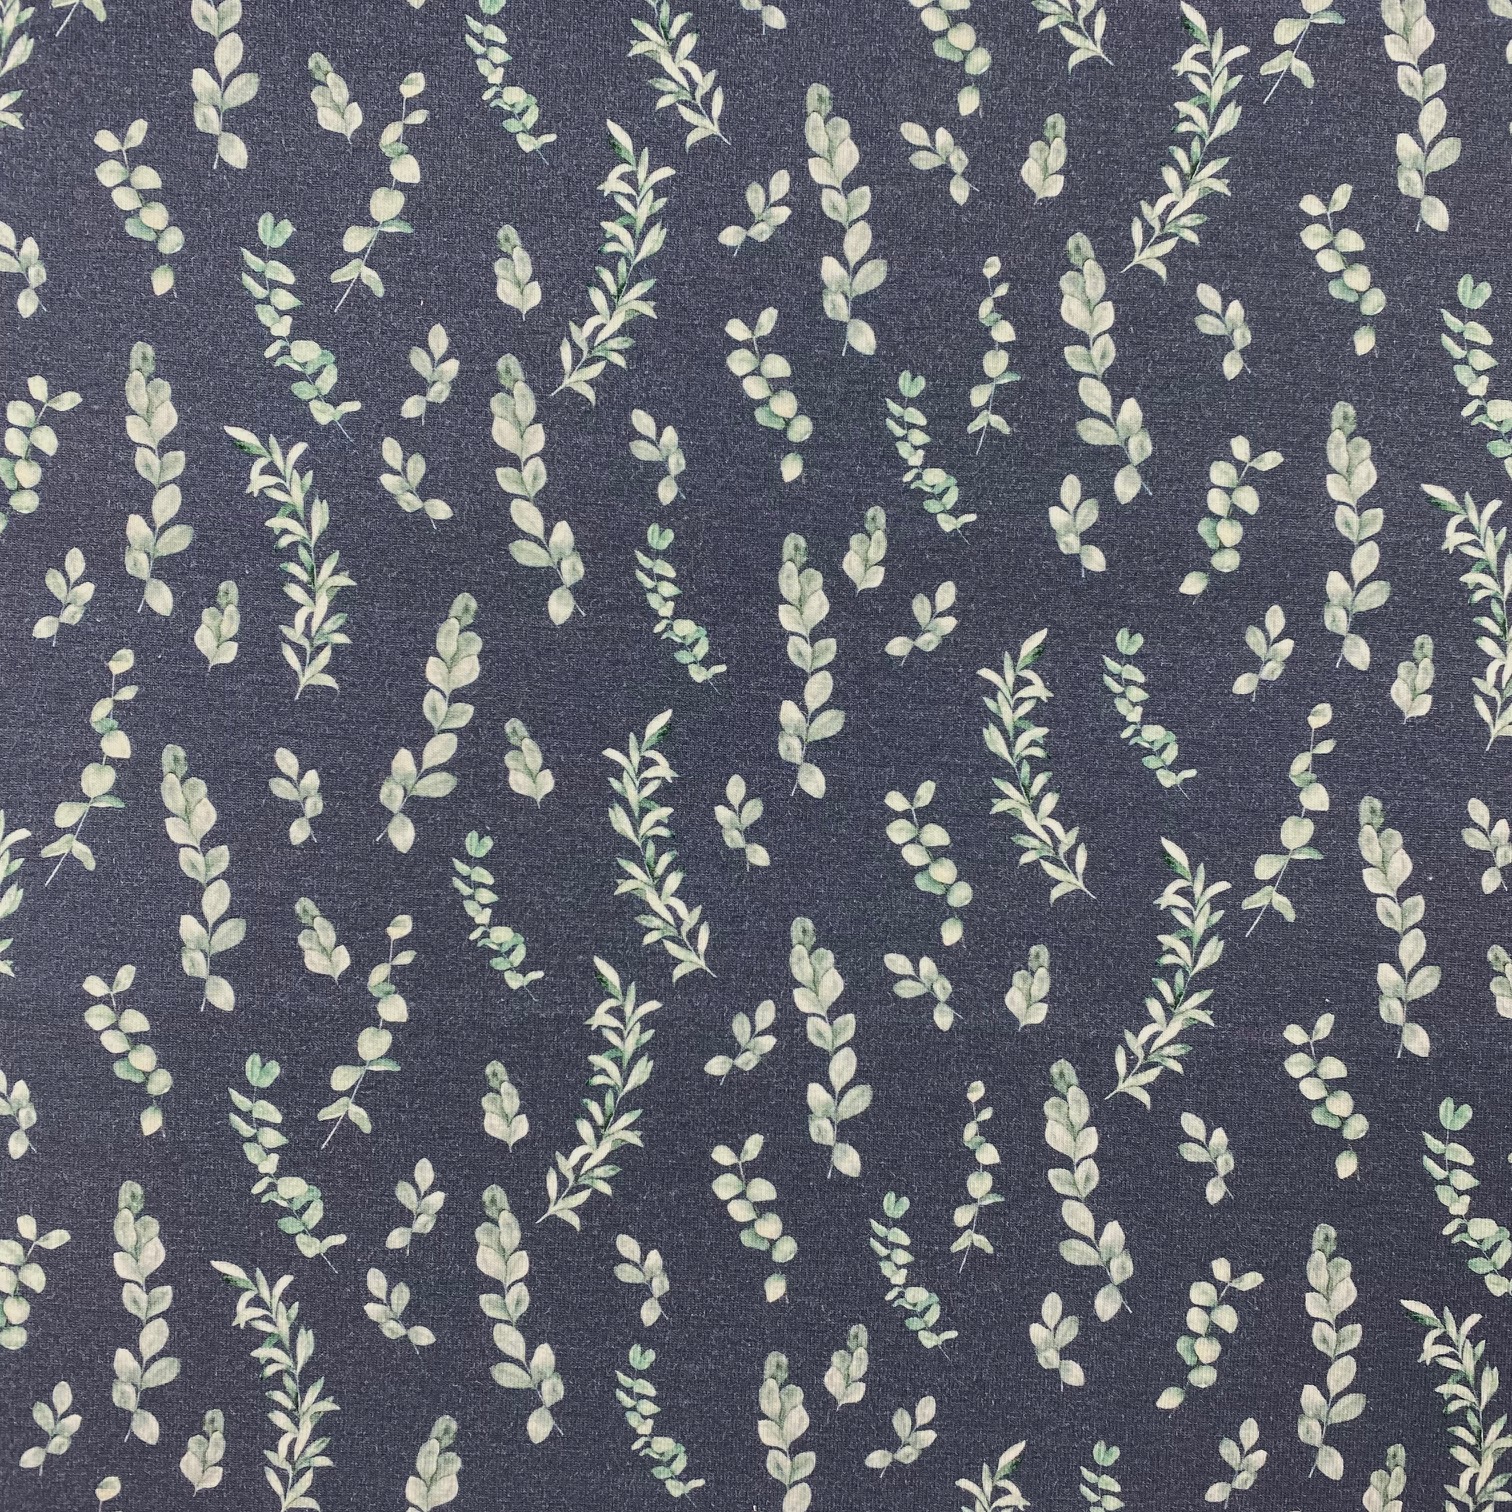 Baumwolljersey, Eukalyptus, Digital Druck, jeansblau. Art. 4973-1107